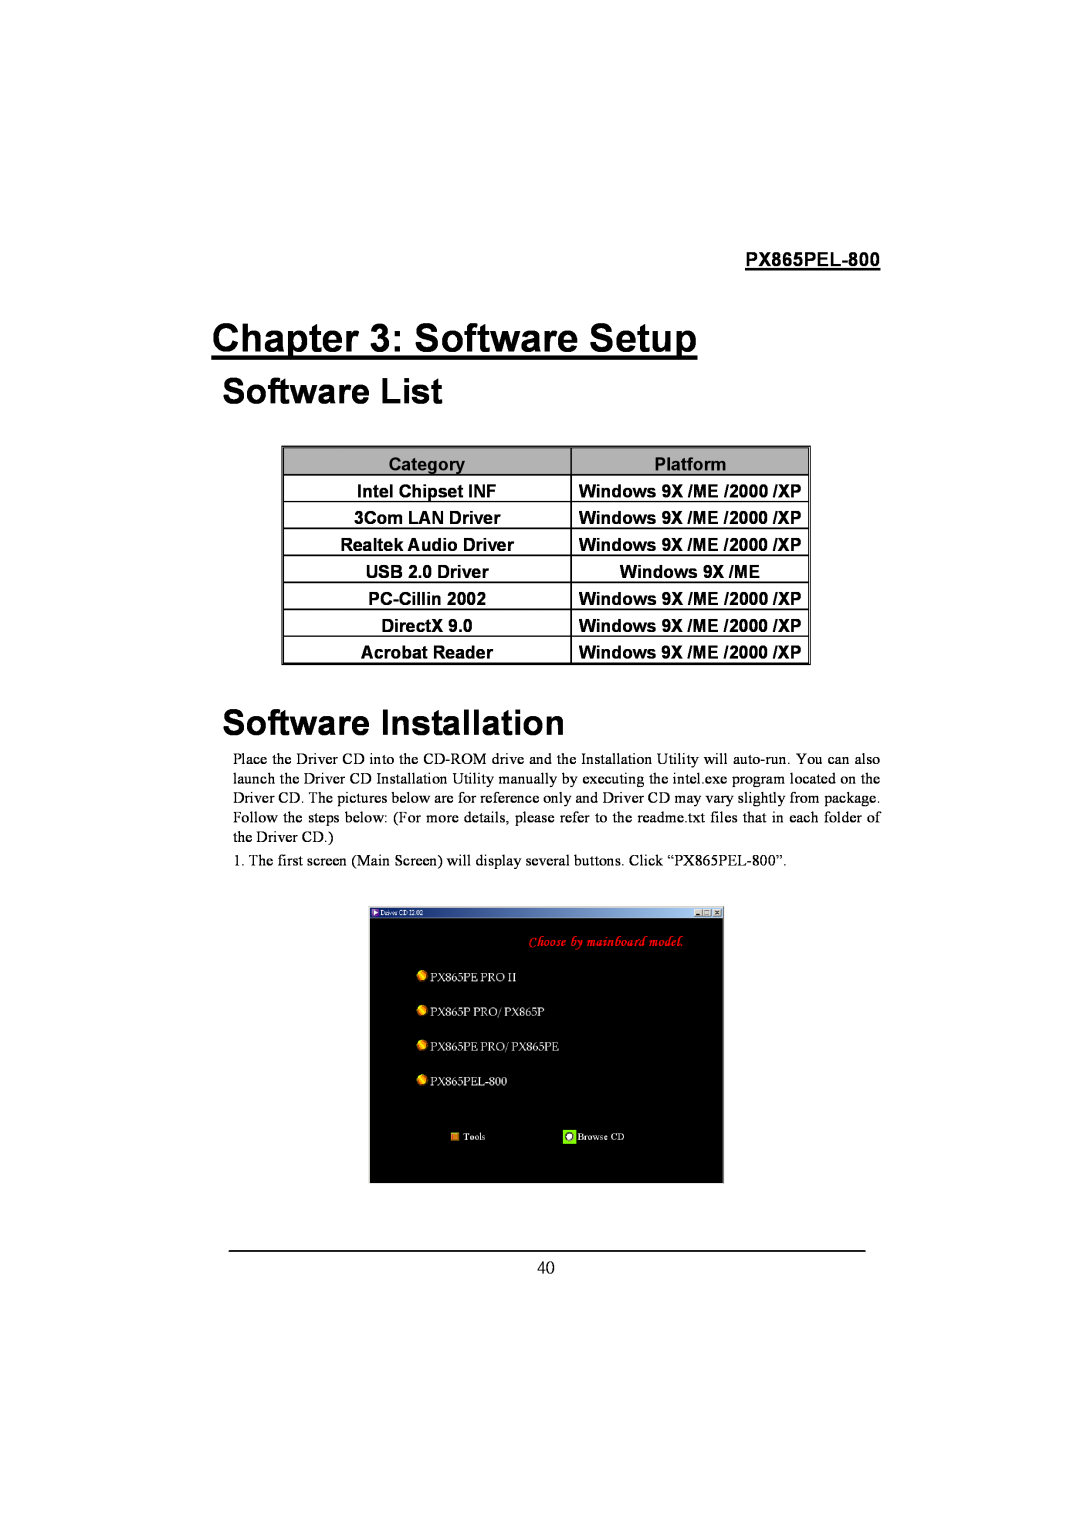 Intel PX865PEL-800 Software Setup, Software List, Software Installation, Category, Platform, USB 2.0 Driver, PC-Cillin2002 